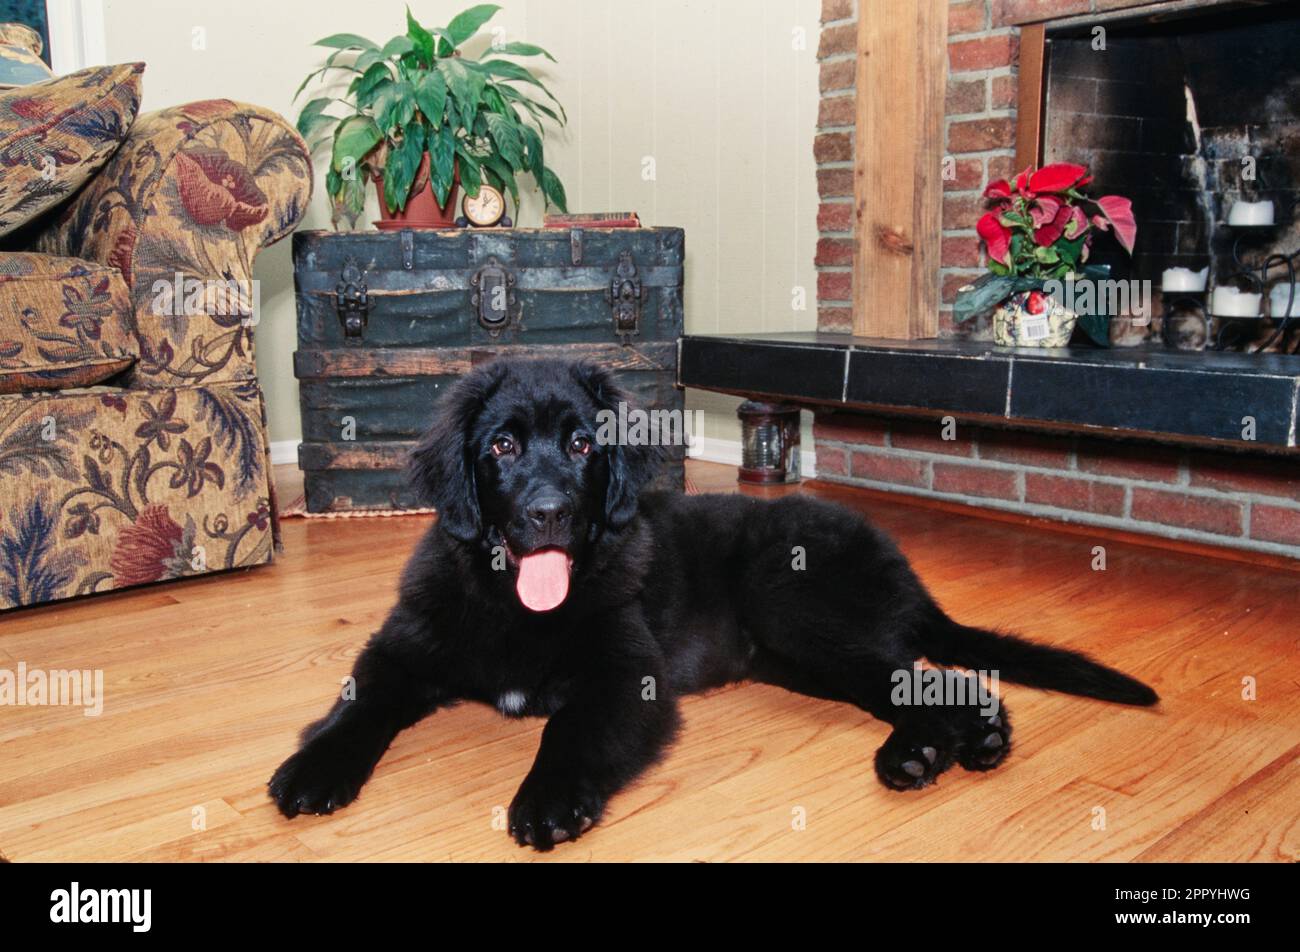 Black Newfoundland puppy sitting on wooden floor inside near fireplace Stock Photo